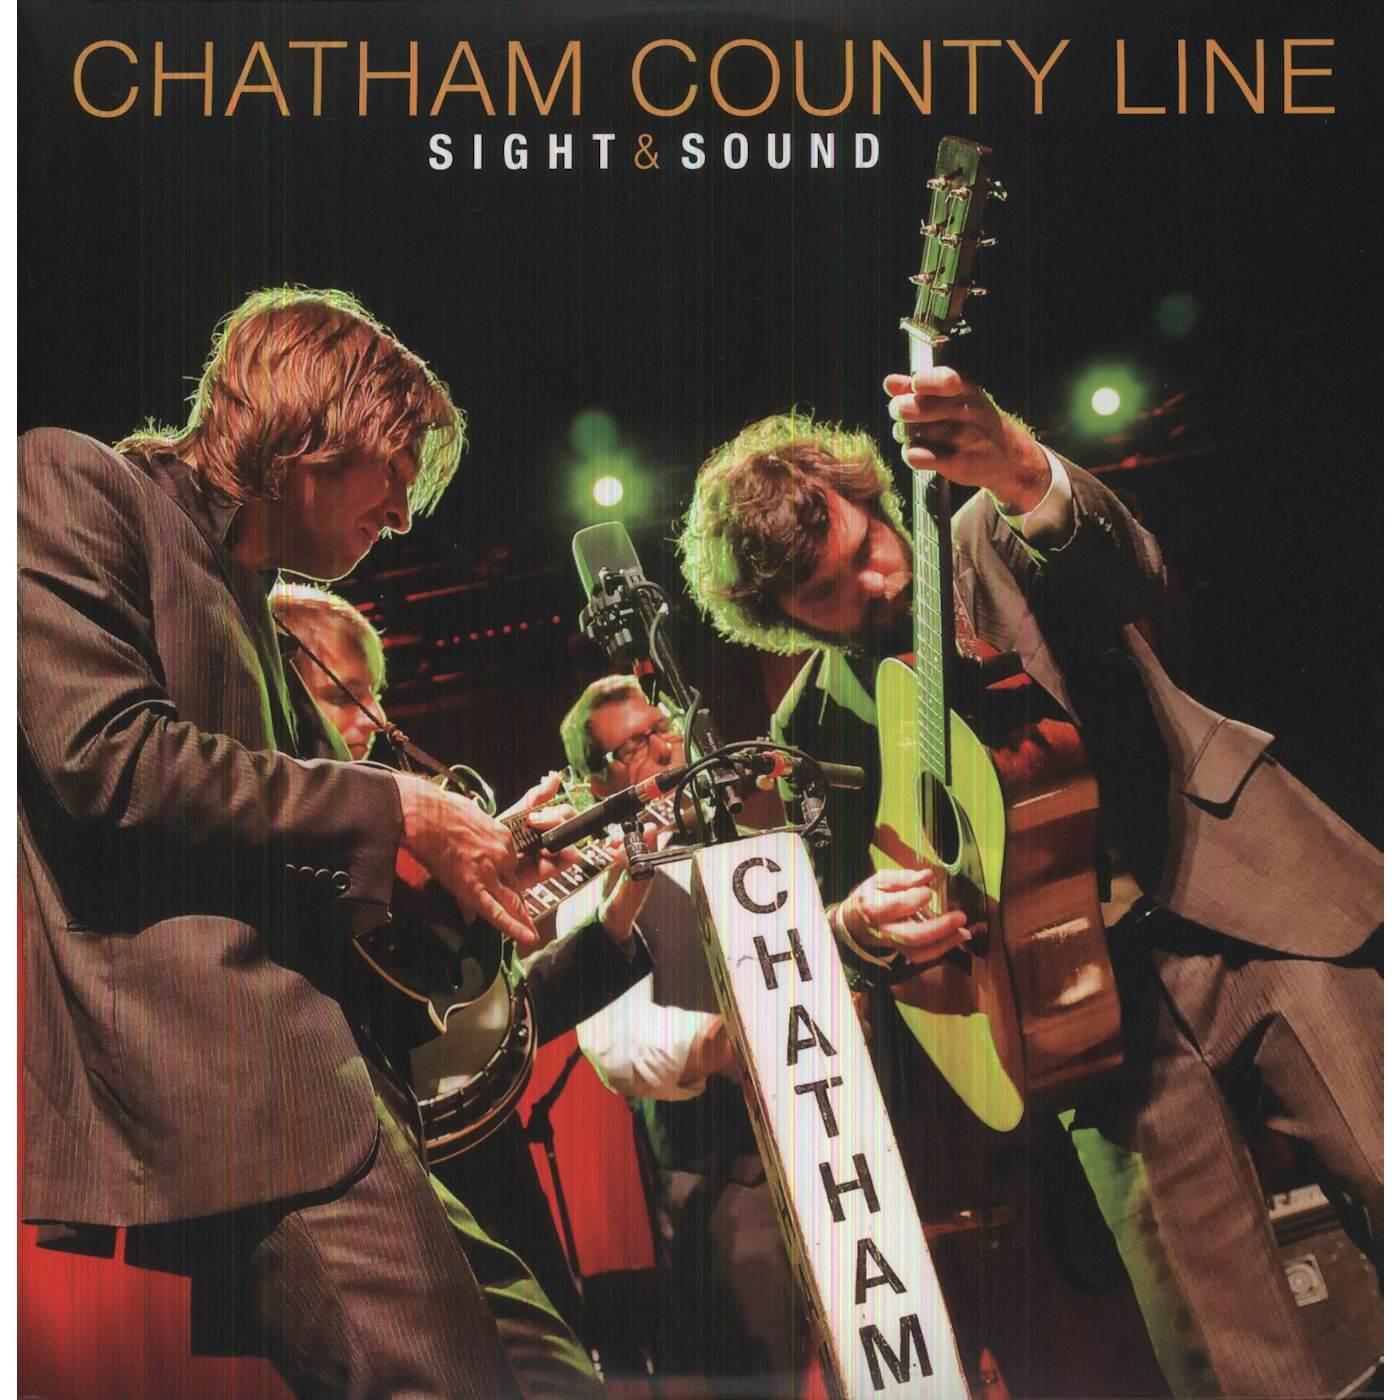 Chatham County Line Sight & Sound Vinyl Record